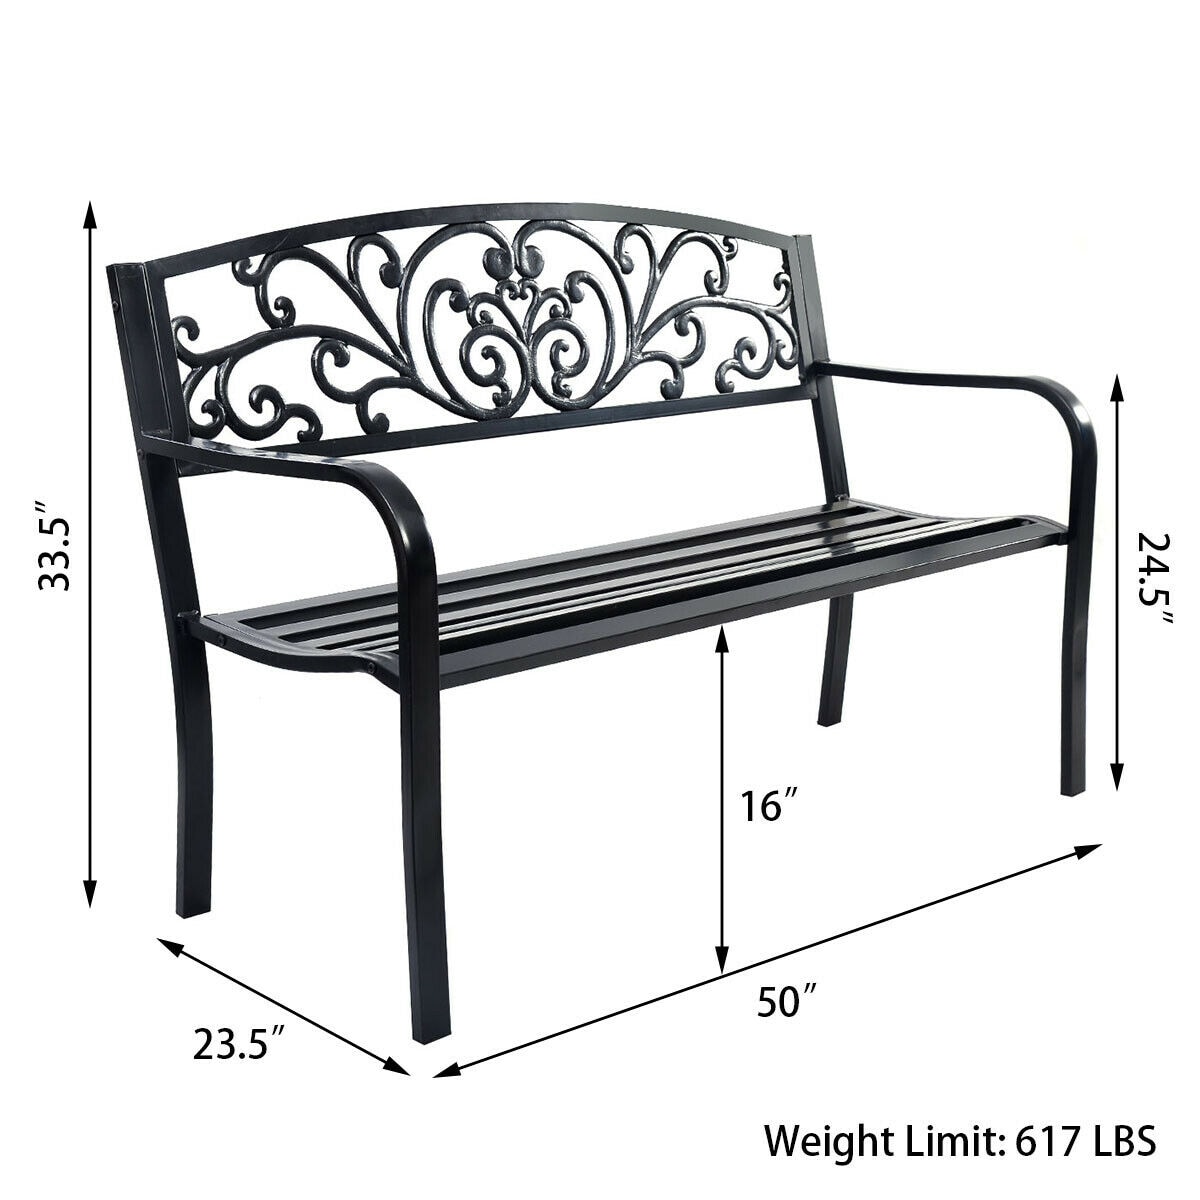 Details about   50 in Patio Outdoor Park Garden Bench Porch Chair Steel Frame Cast Iron Backrest 